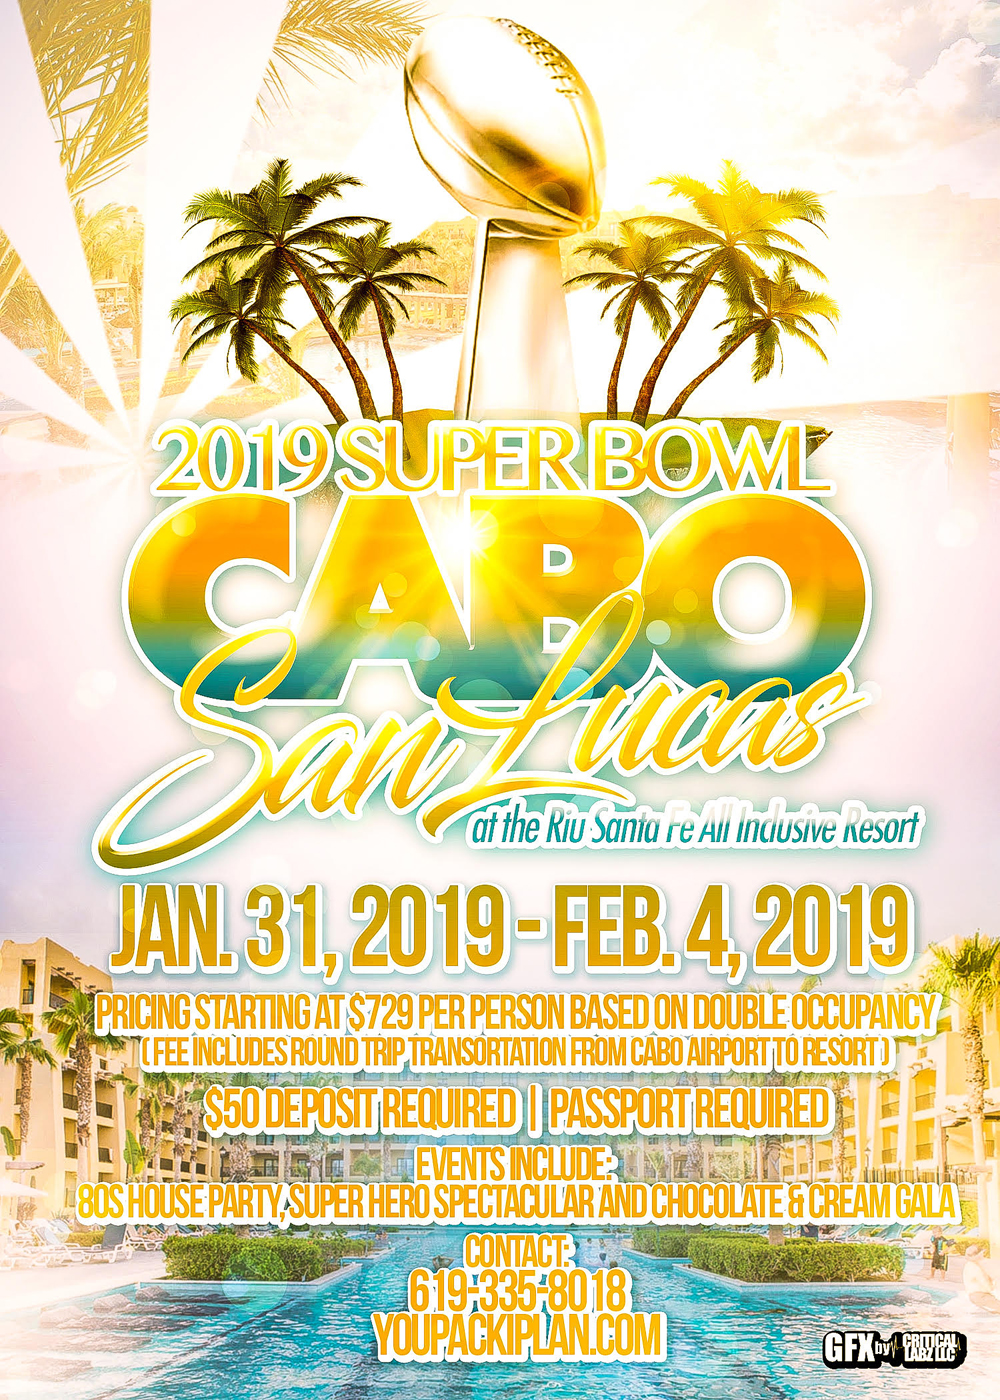 singles de cabo san lucas 2019 events